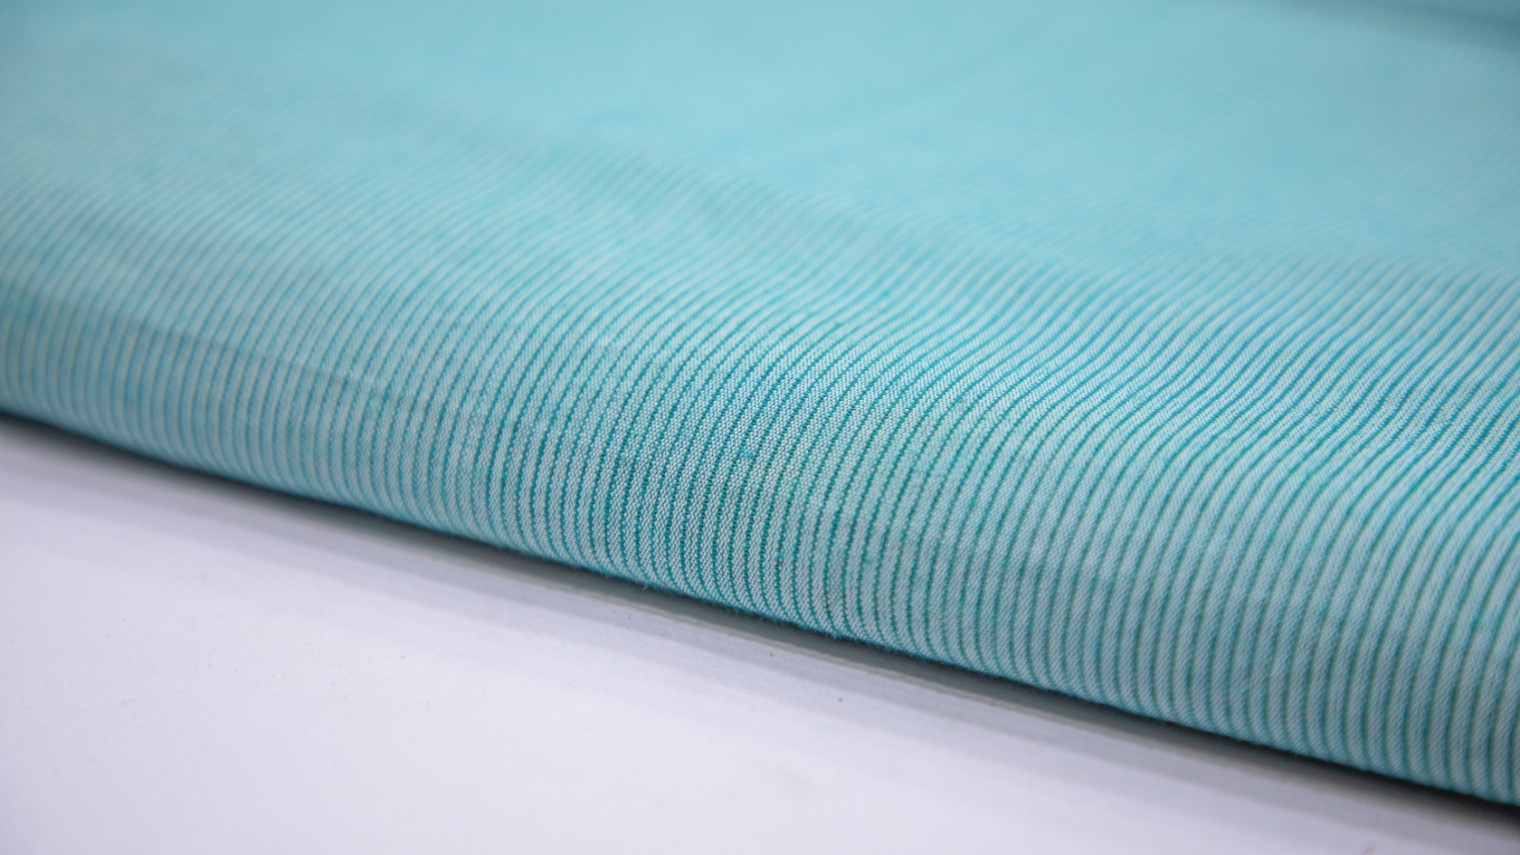 Aqua Blue Color South Cotton Handloom Blue Thin Stripes Weave Fabric - 4326